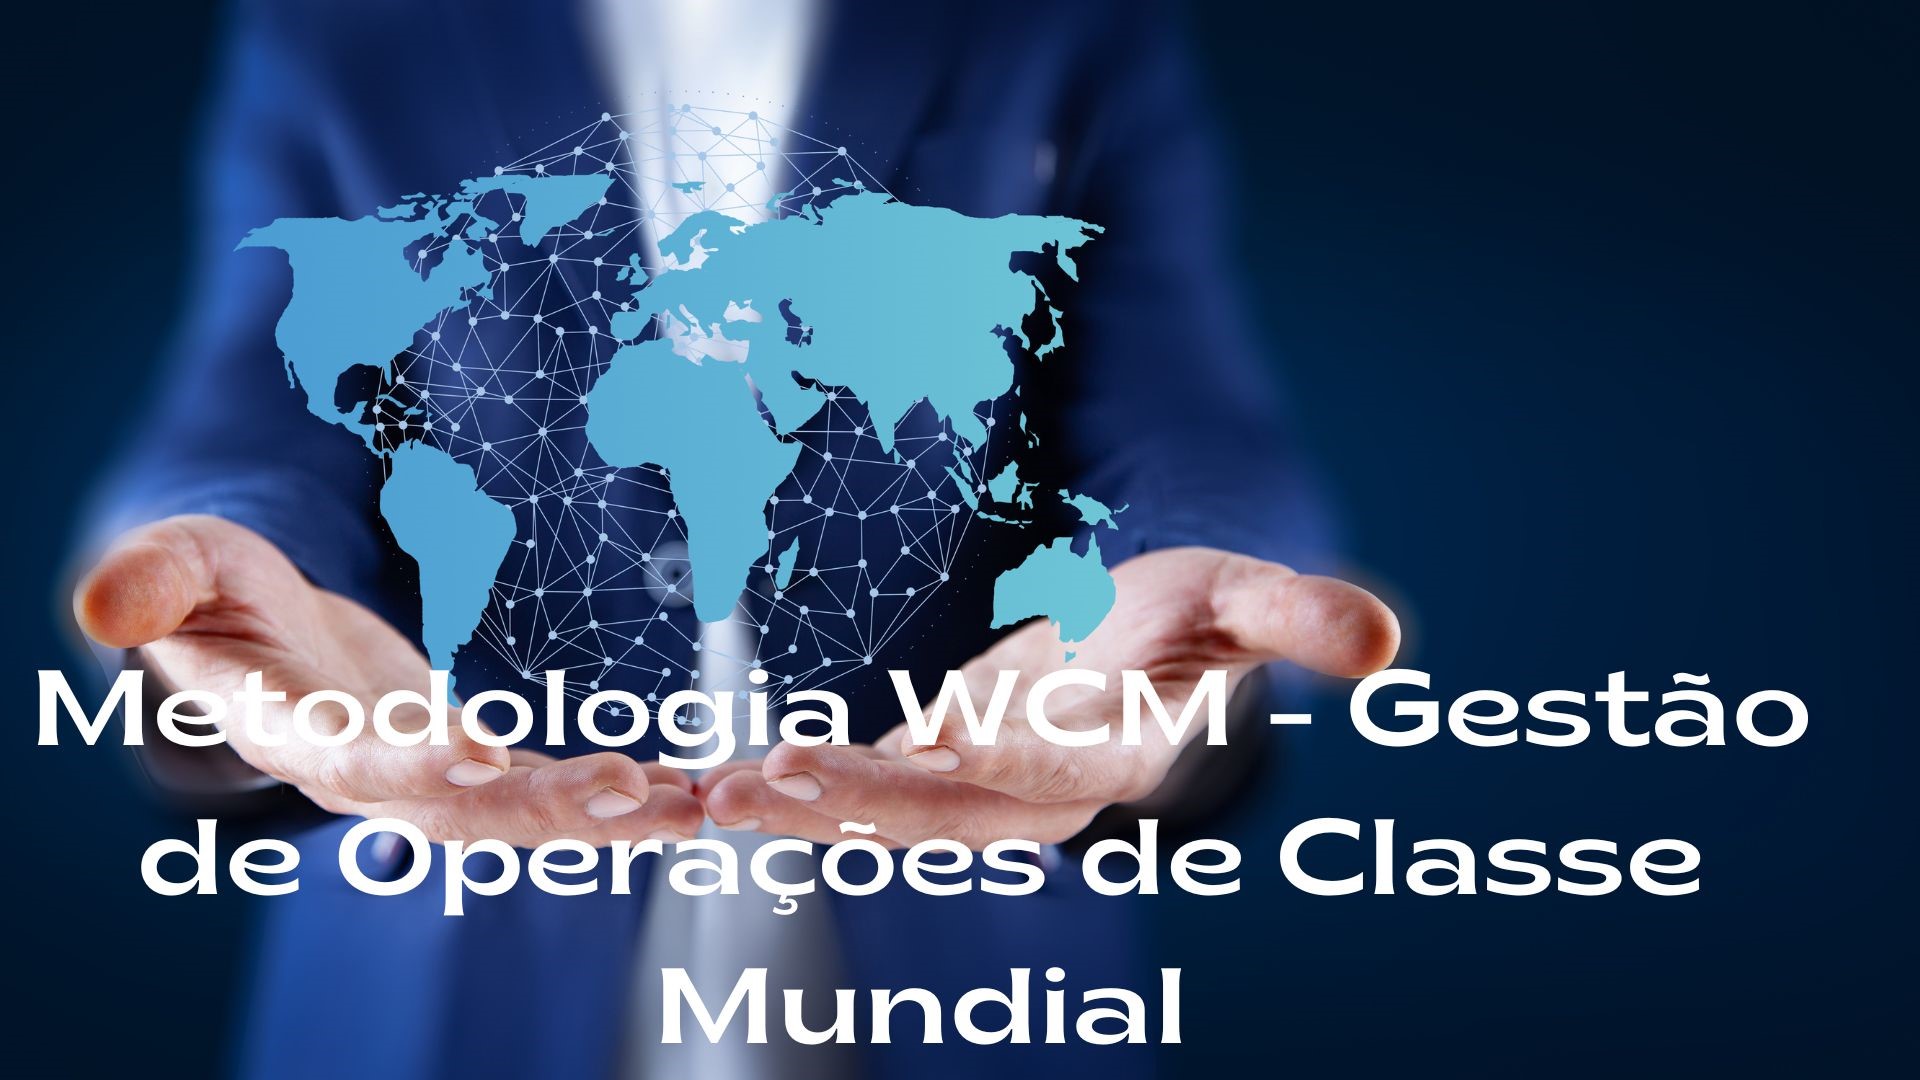 WCM: A metodologia da excelência industrial!